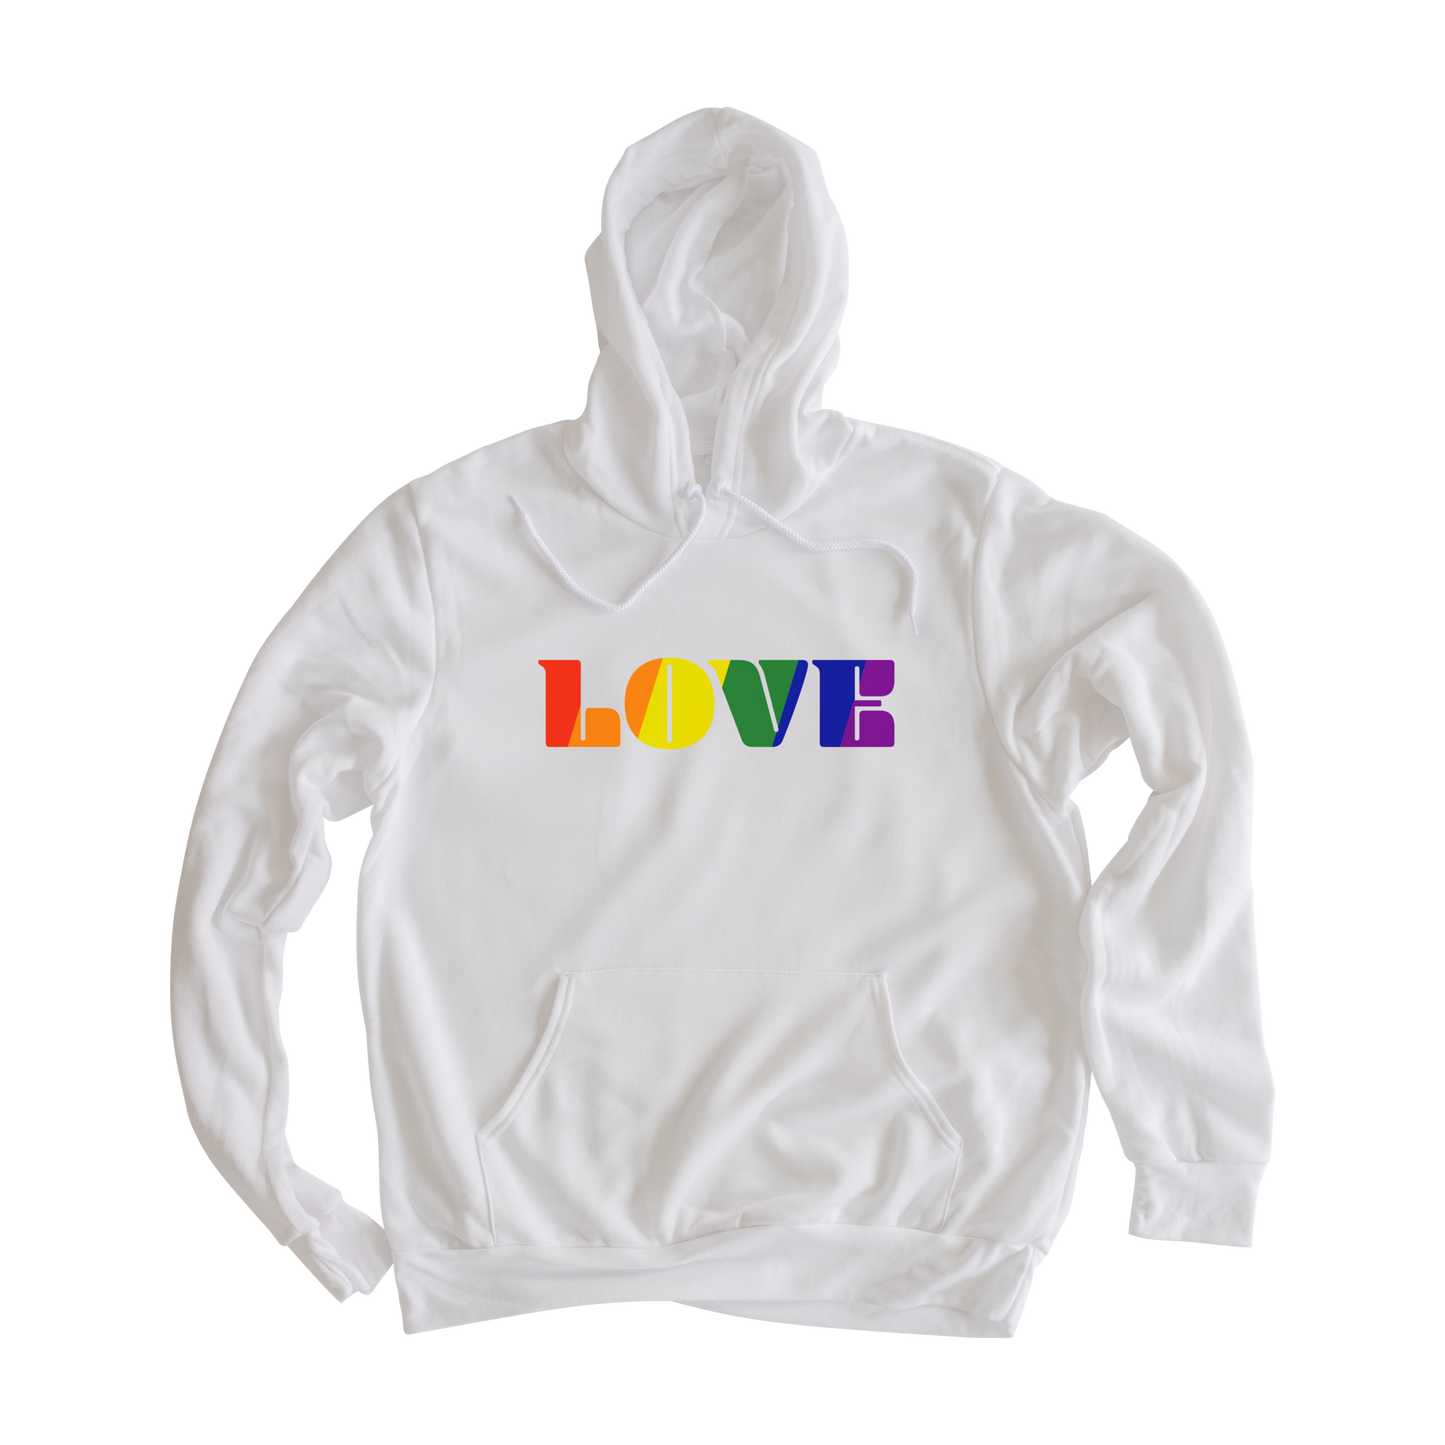 LOVE Hooded Sweatshirt